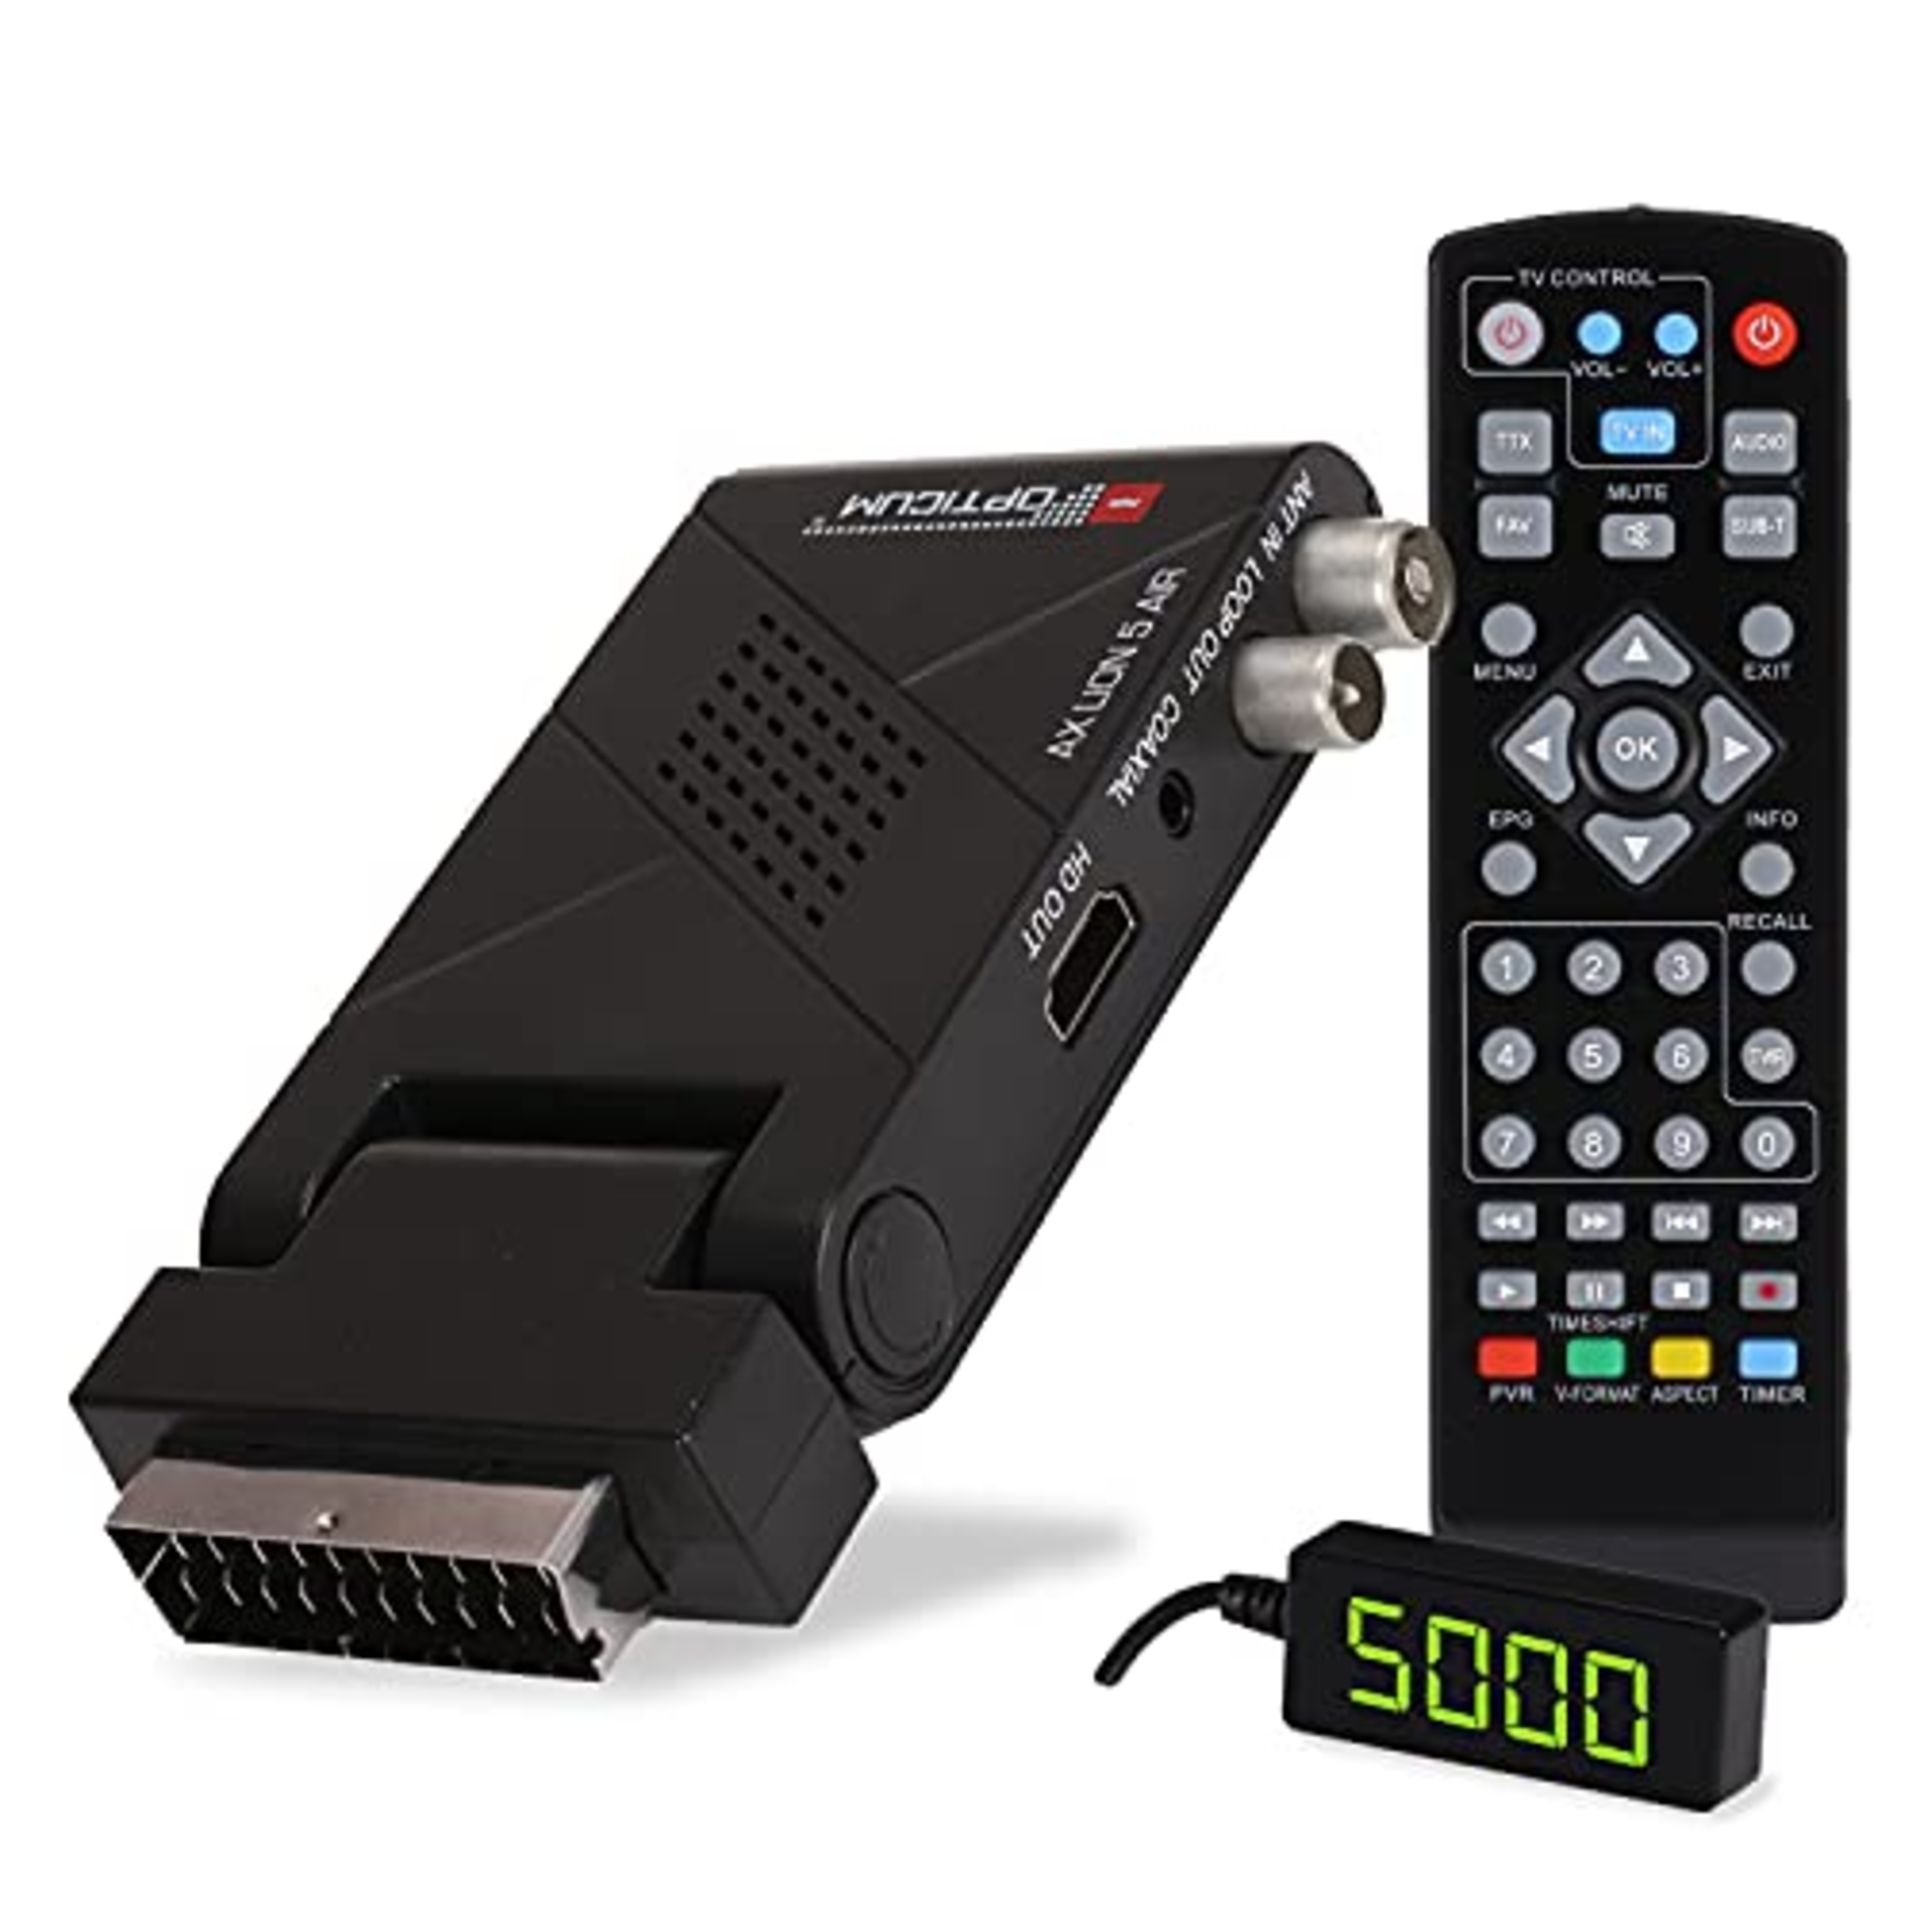 RED OPTICUM AX Lion 5 Air DVB-T2 H.265 Receiver with Recording Function - External IR